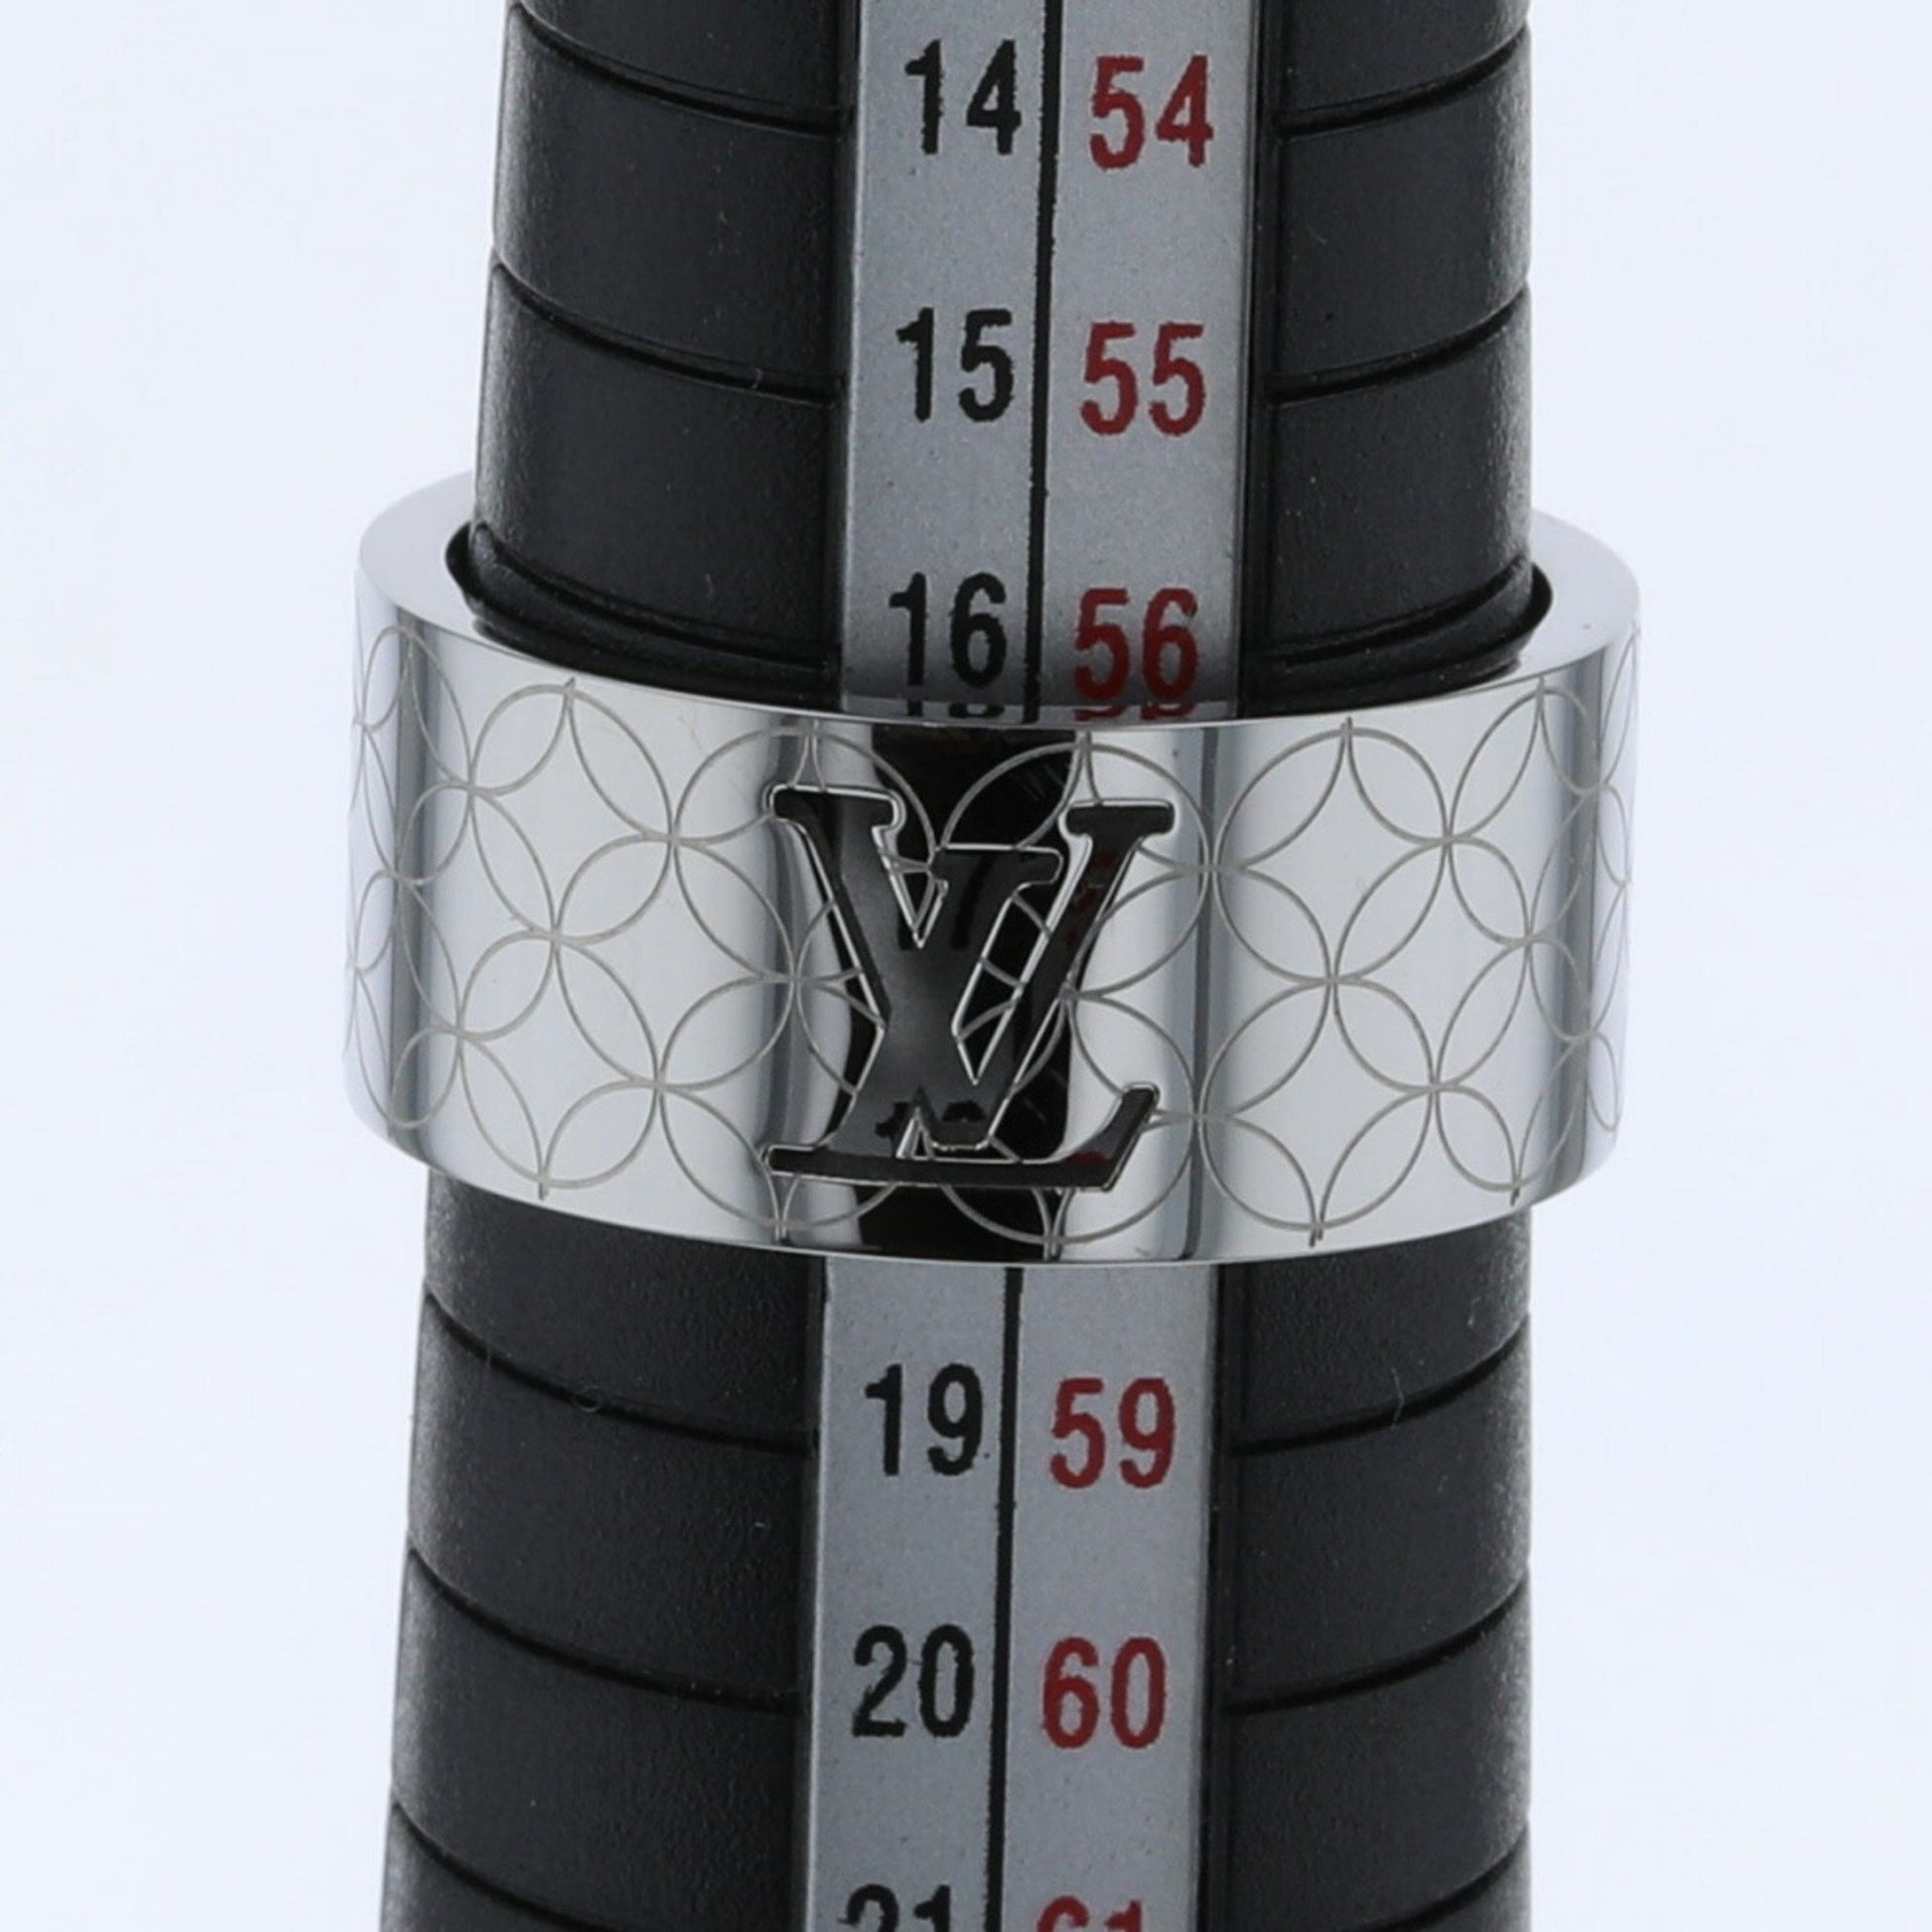 Louis Vuitton Berg Louisette Ring S size about 6.5 M00378